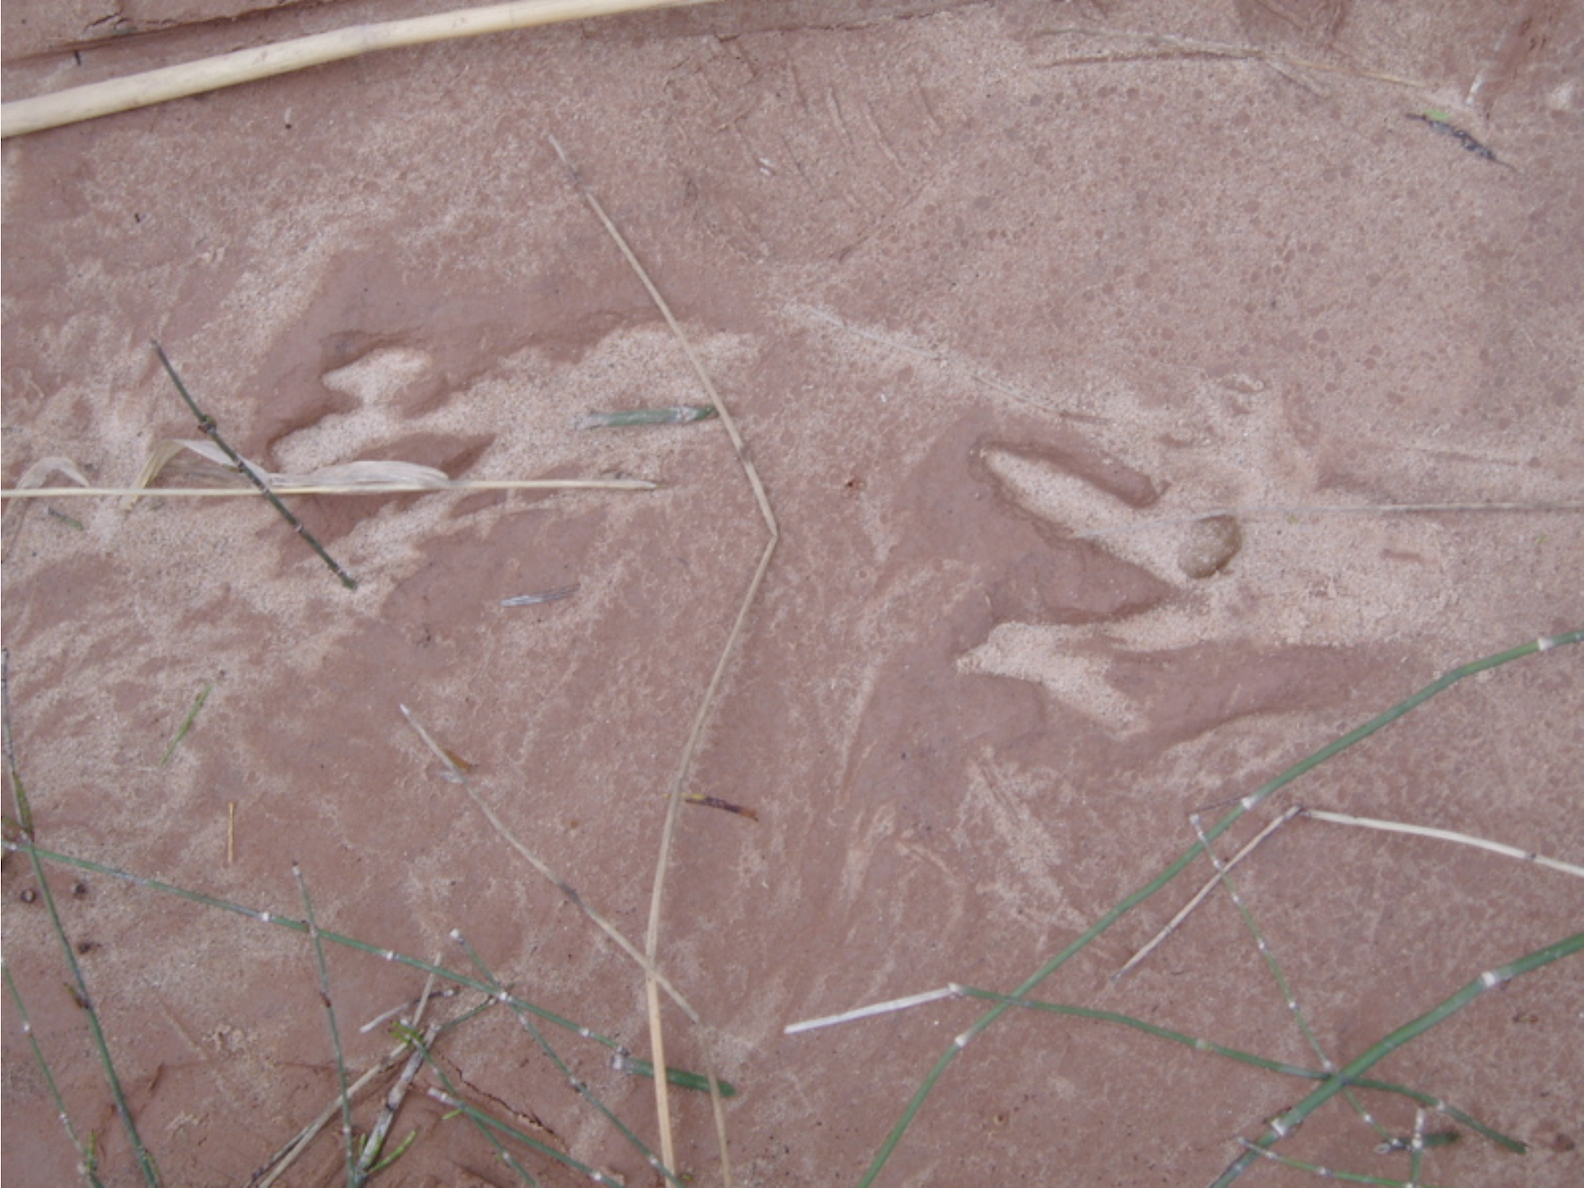 Figure 1. Beaver tracks at river mile 123.